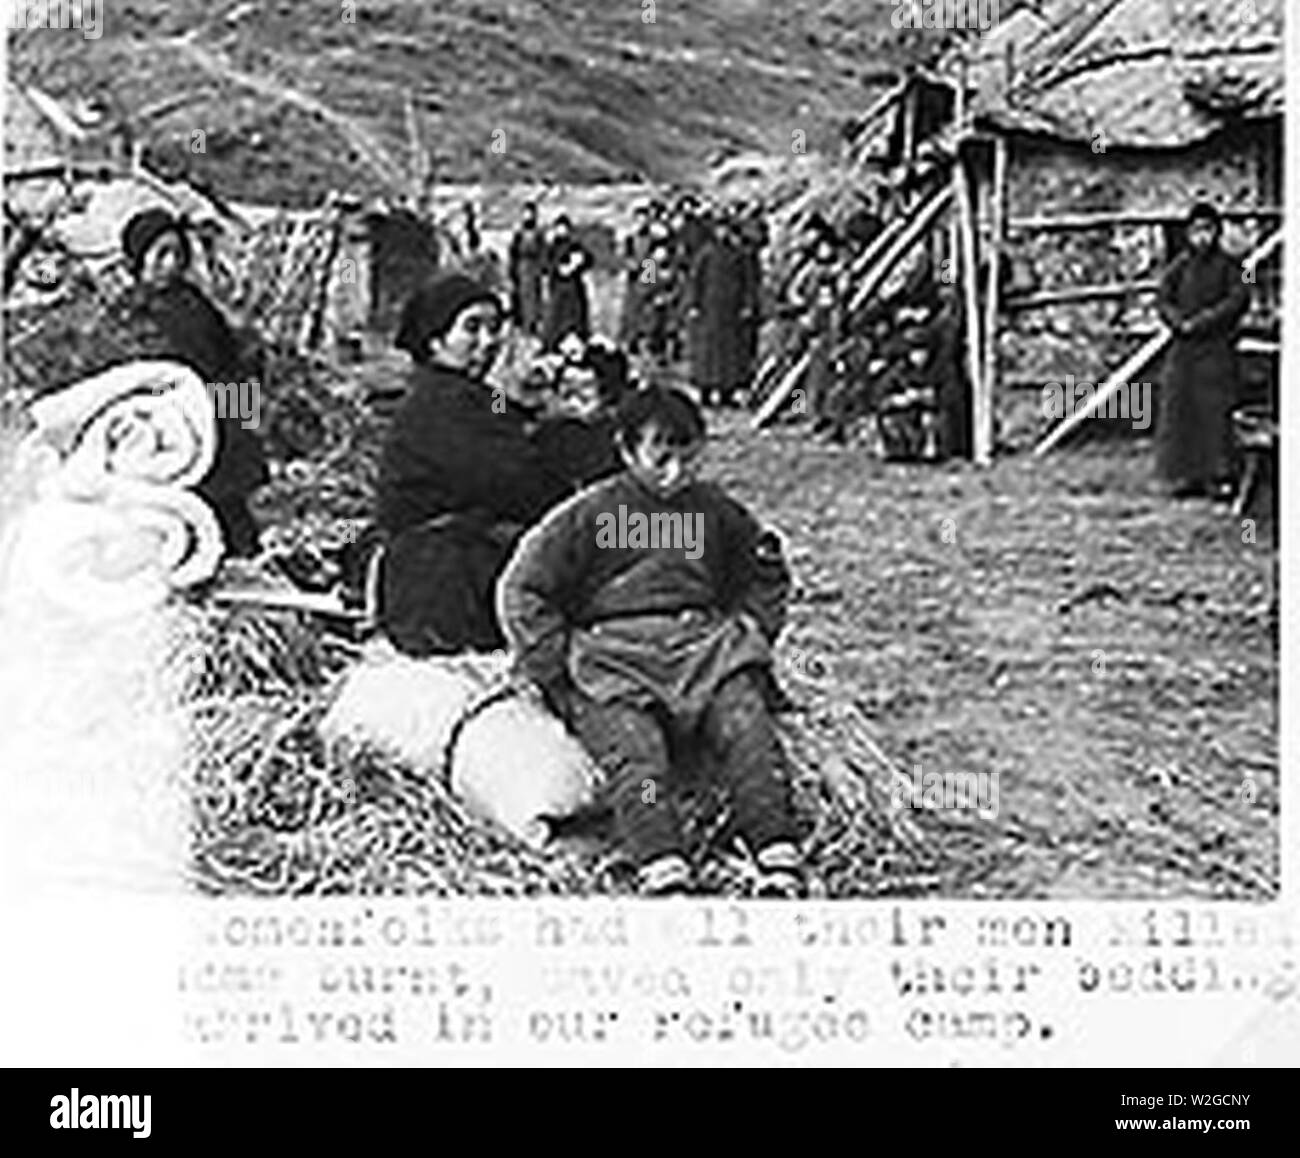 Chinese Women arrive at a refugee camp Nanjing Massacre. Stock Photo